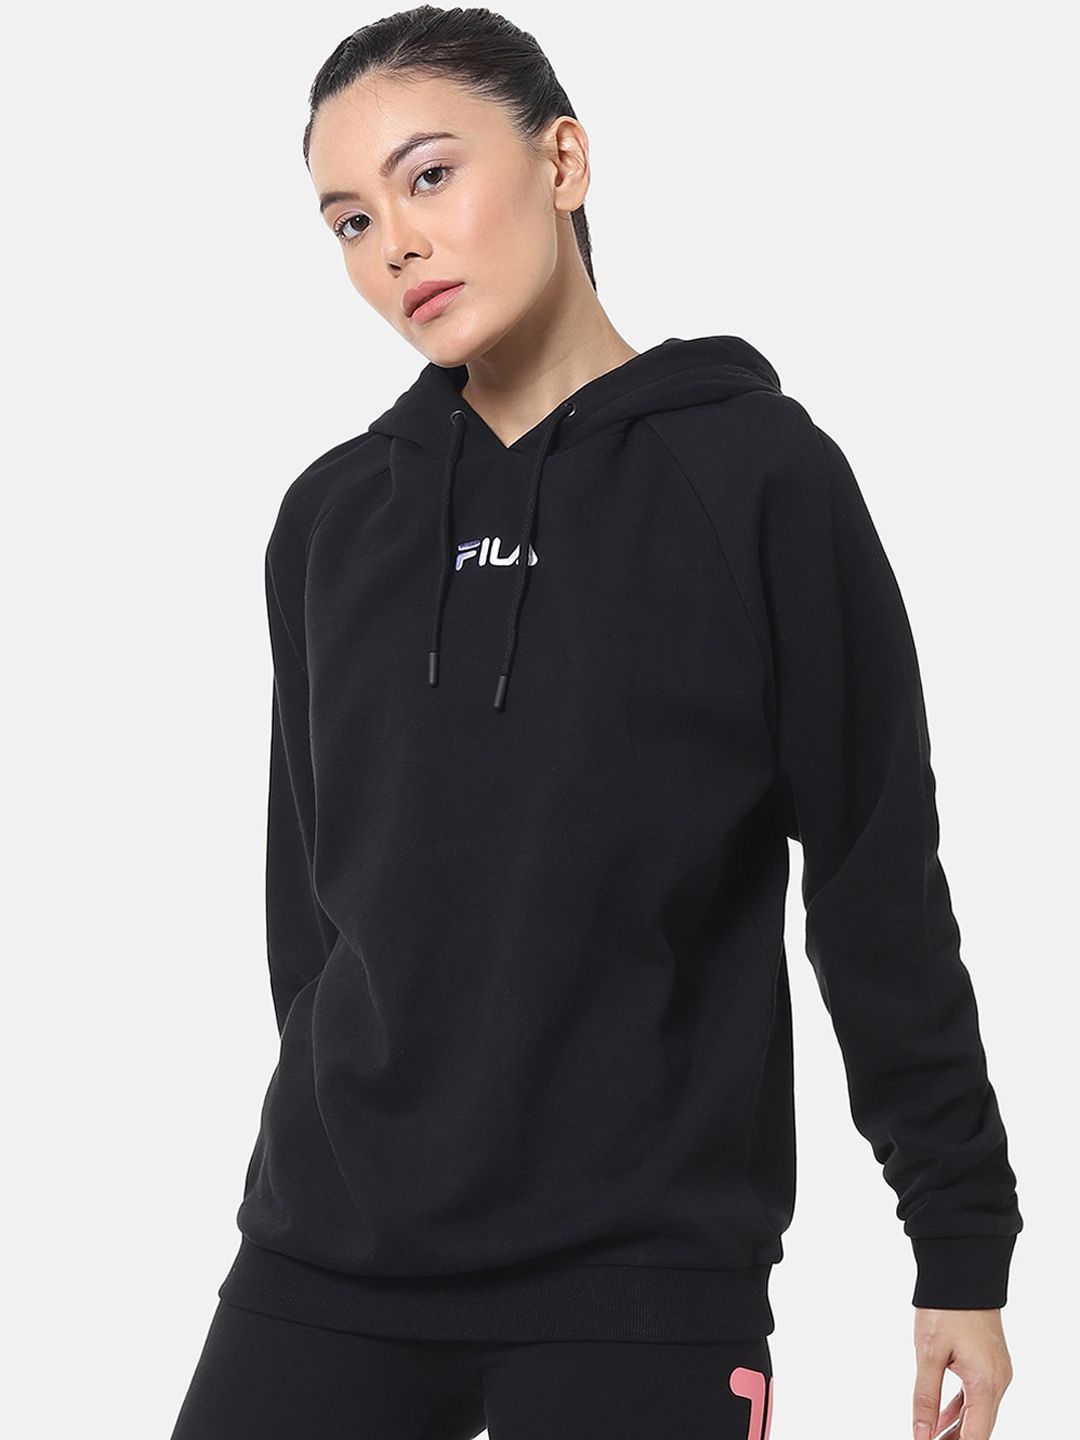 FILA Women Black Solid Hooded Sweatshirt Price in India